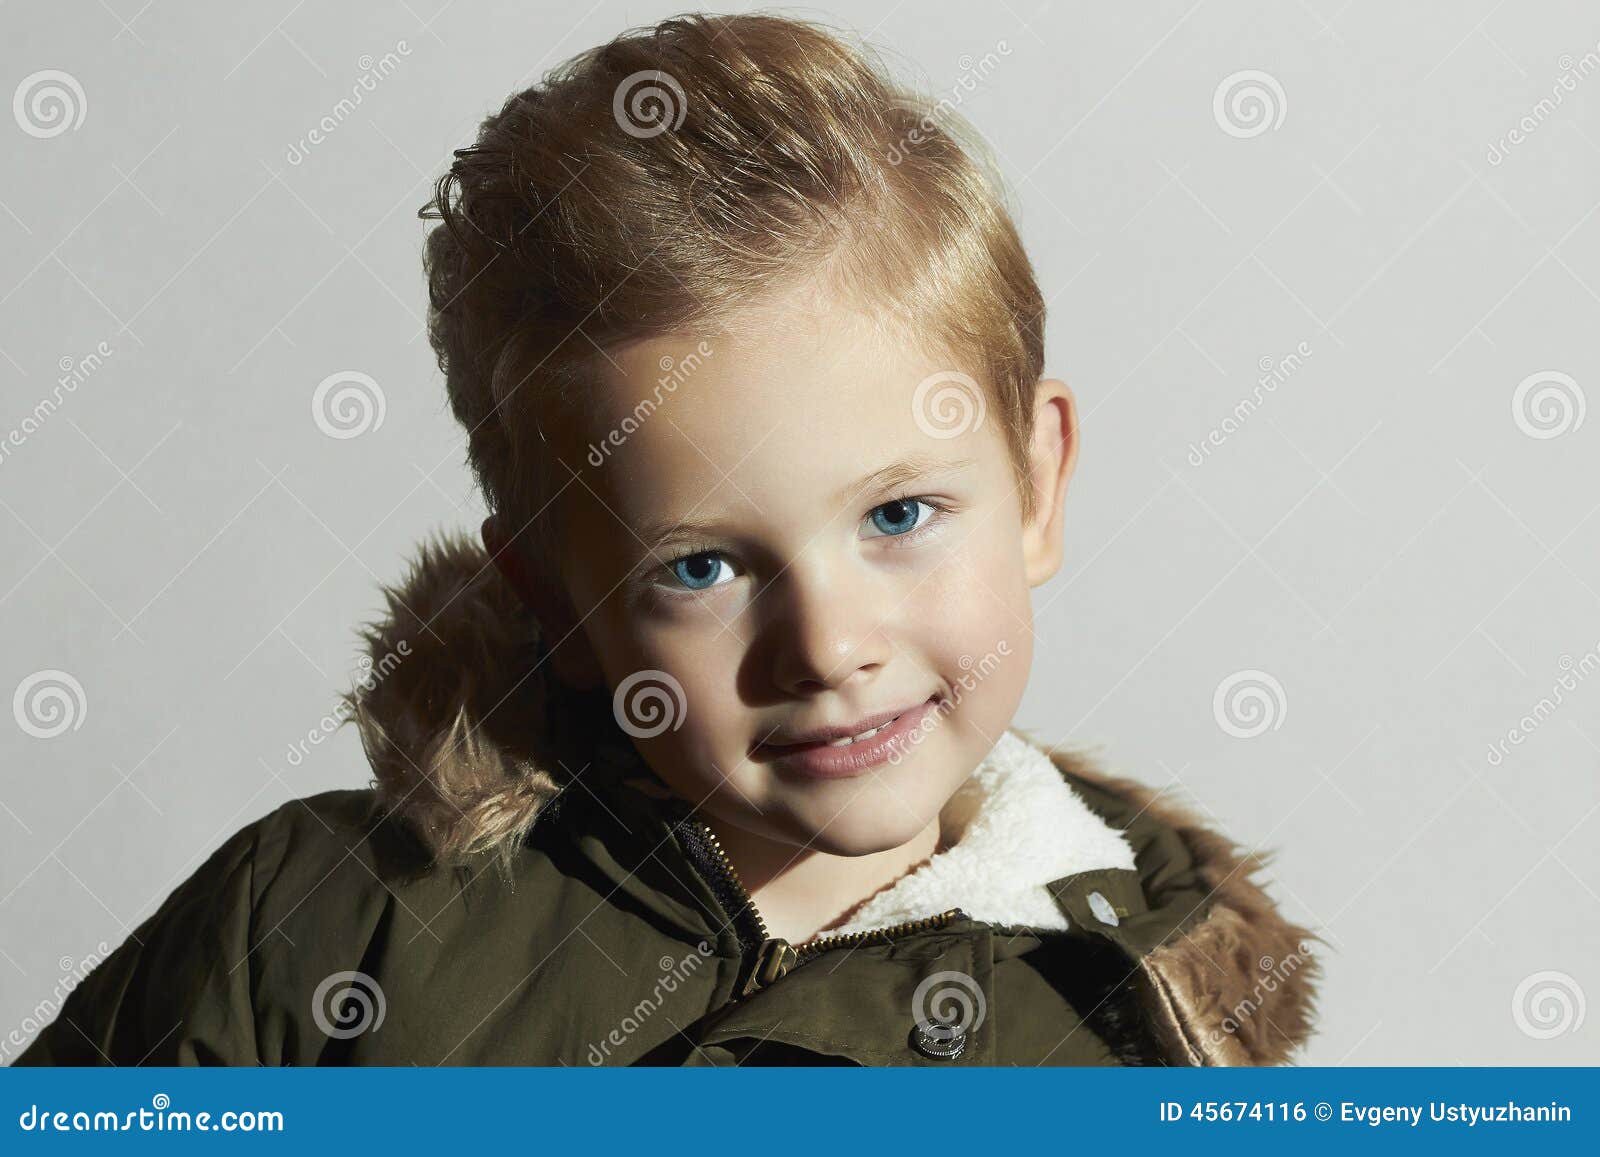 Funny Fashionable Child In Winter Coat Fashion Kids Children